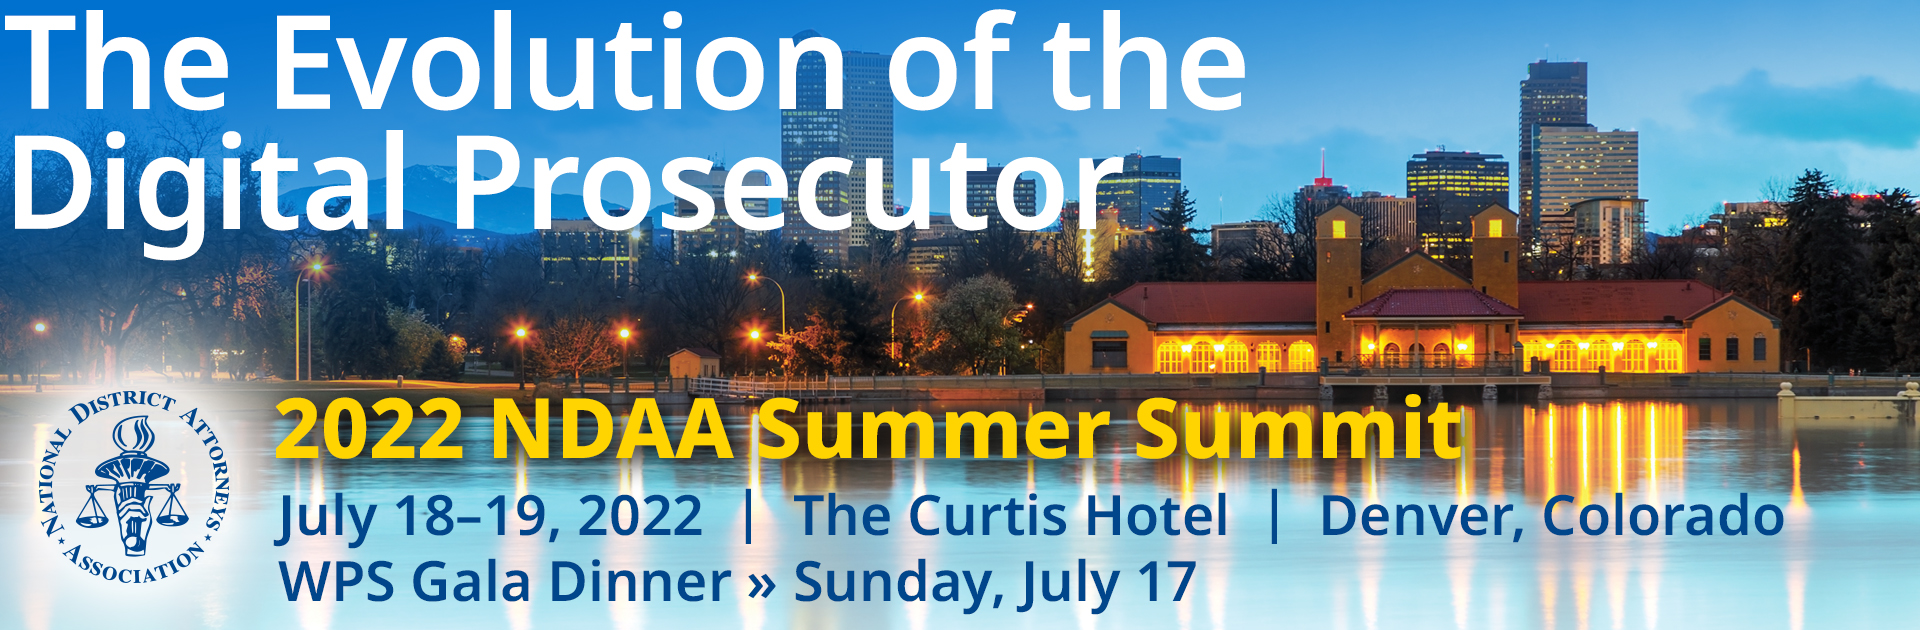 2022 NDAA Summer Summit The Evolution of the Digital Prosecutor